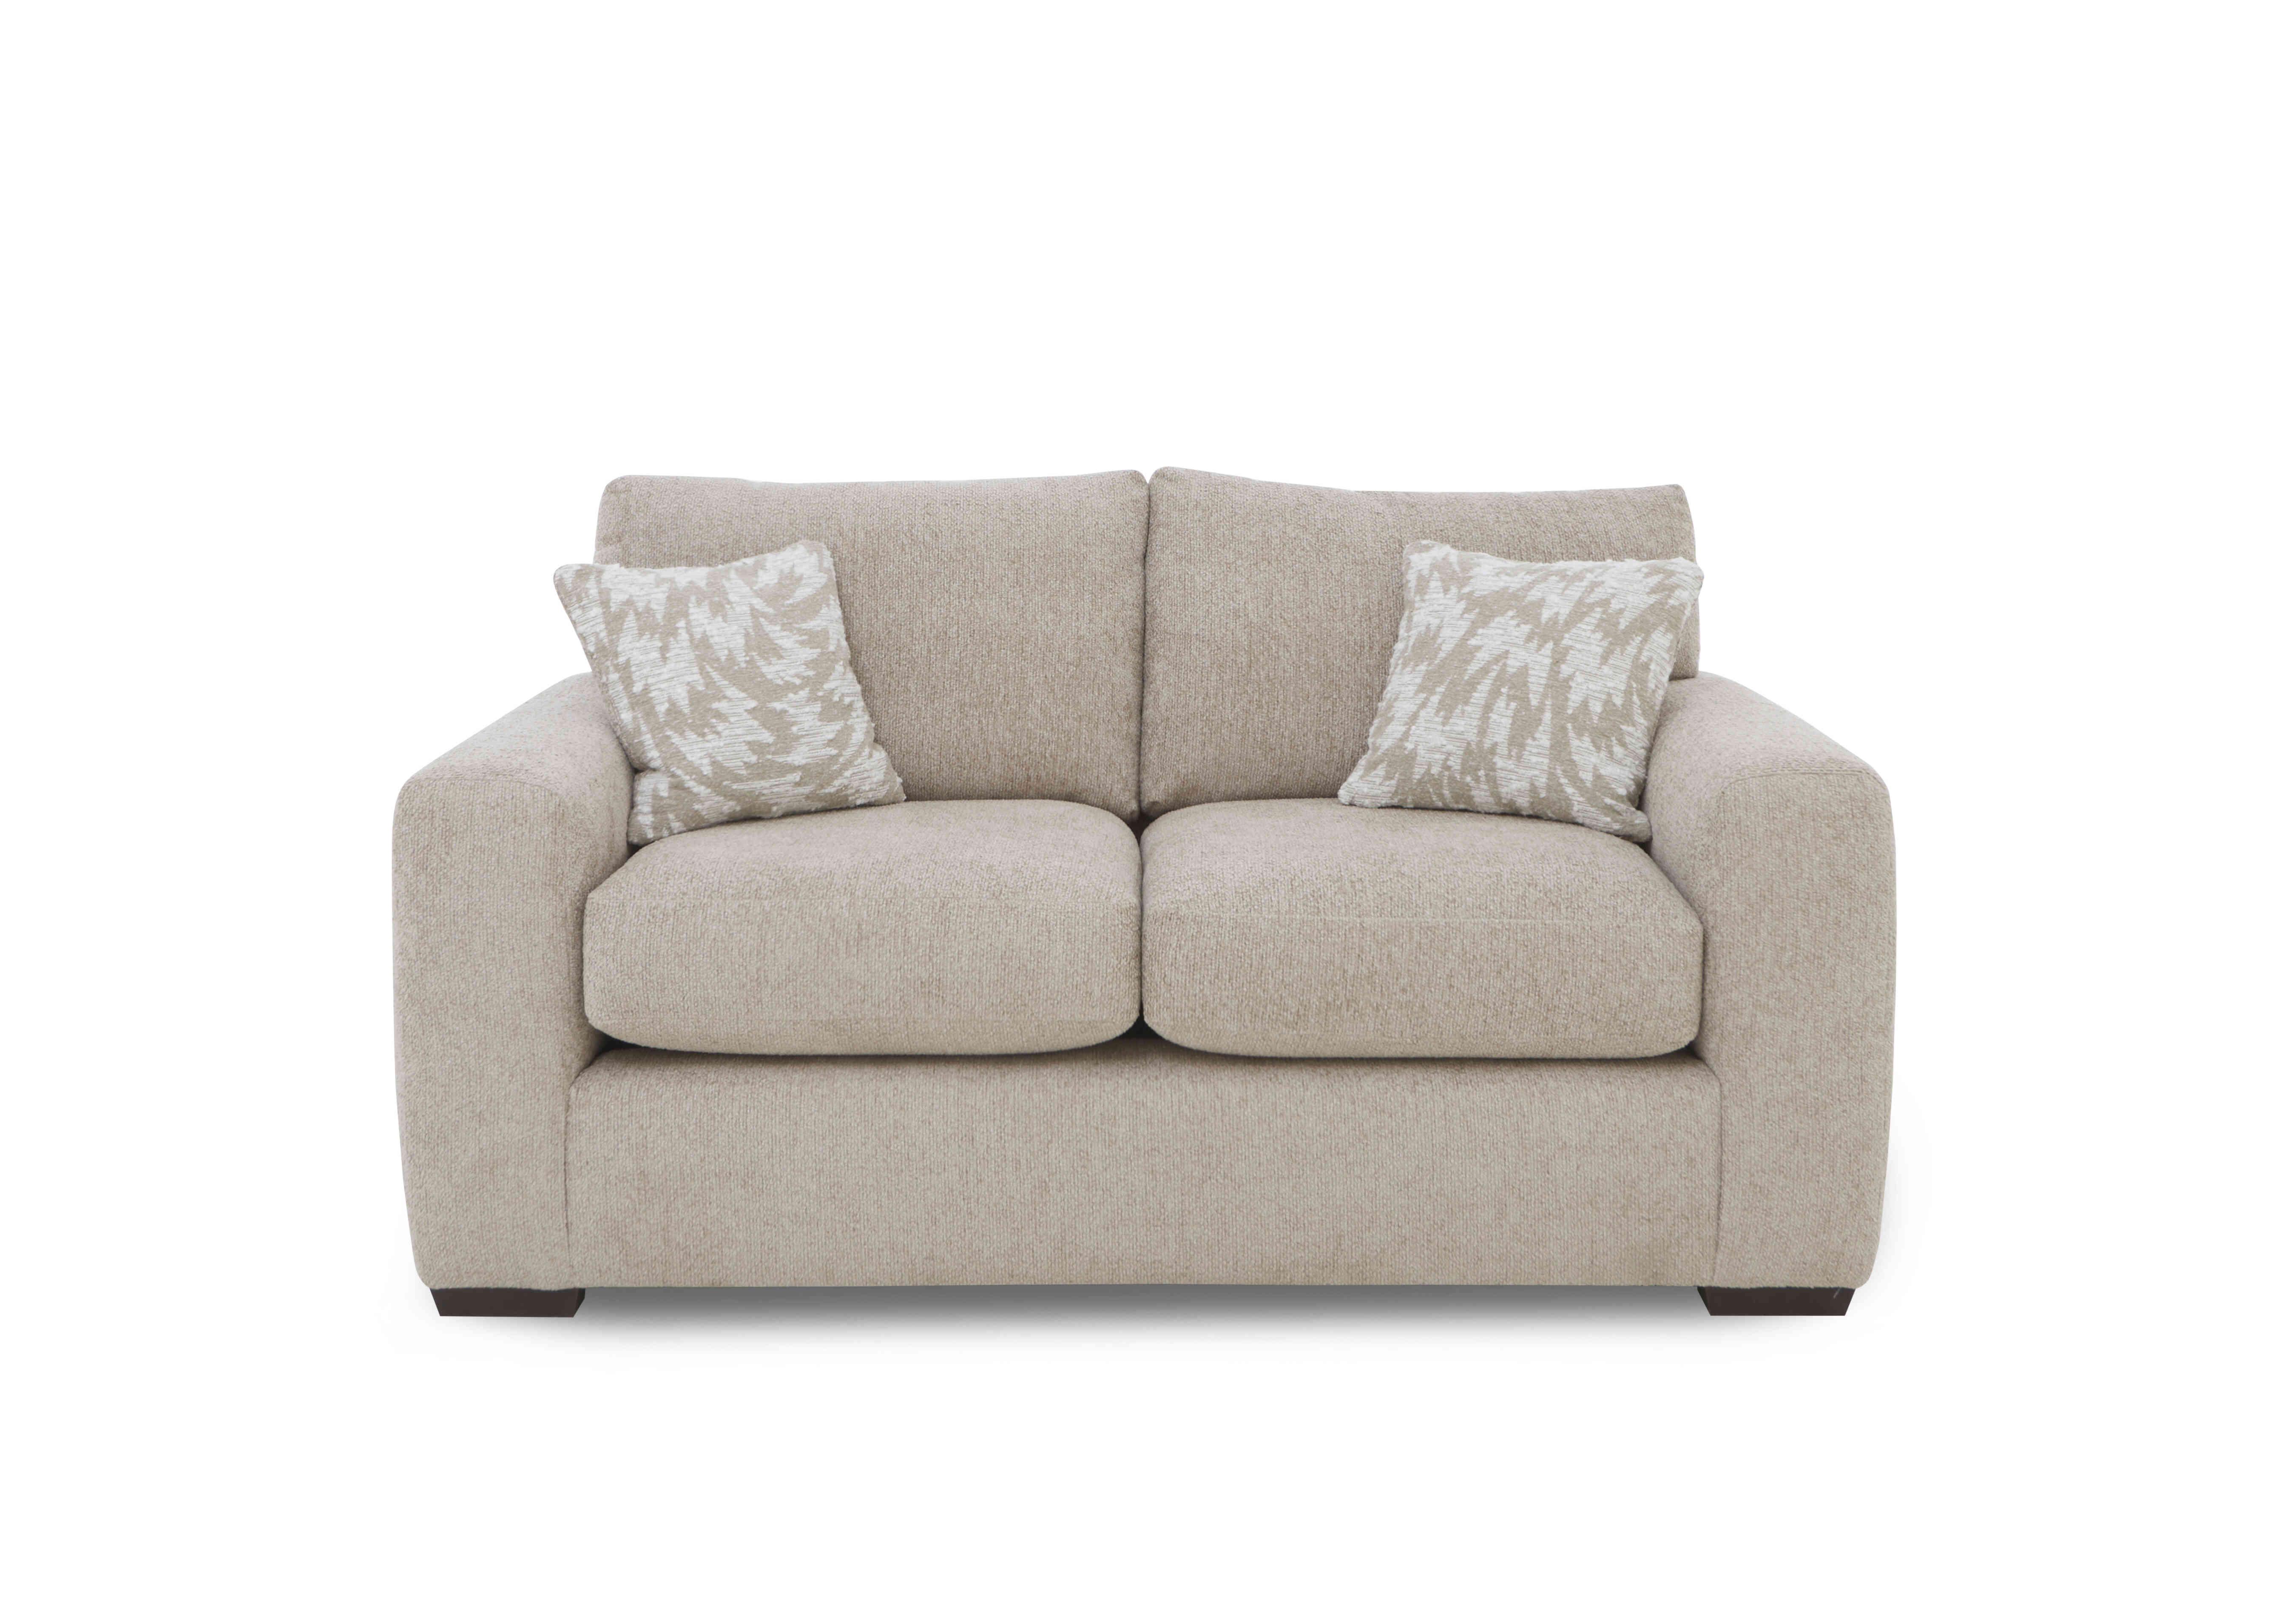 Harper 2 Seater Classic Back Sofa Bed in Leo Wicker on Furniture Village